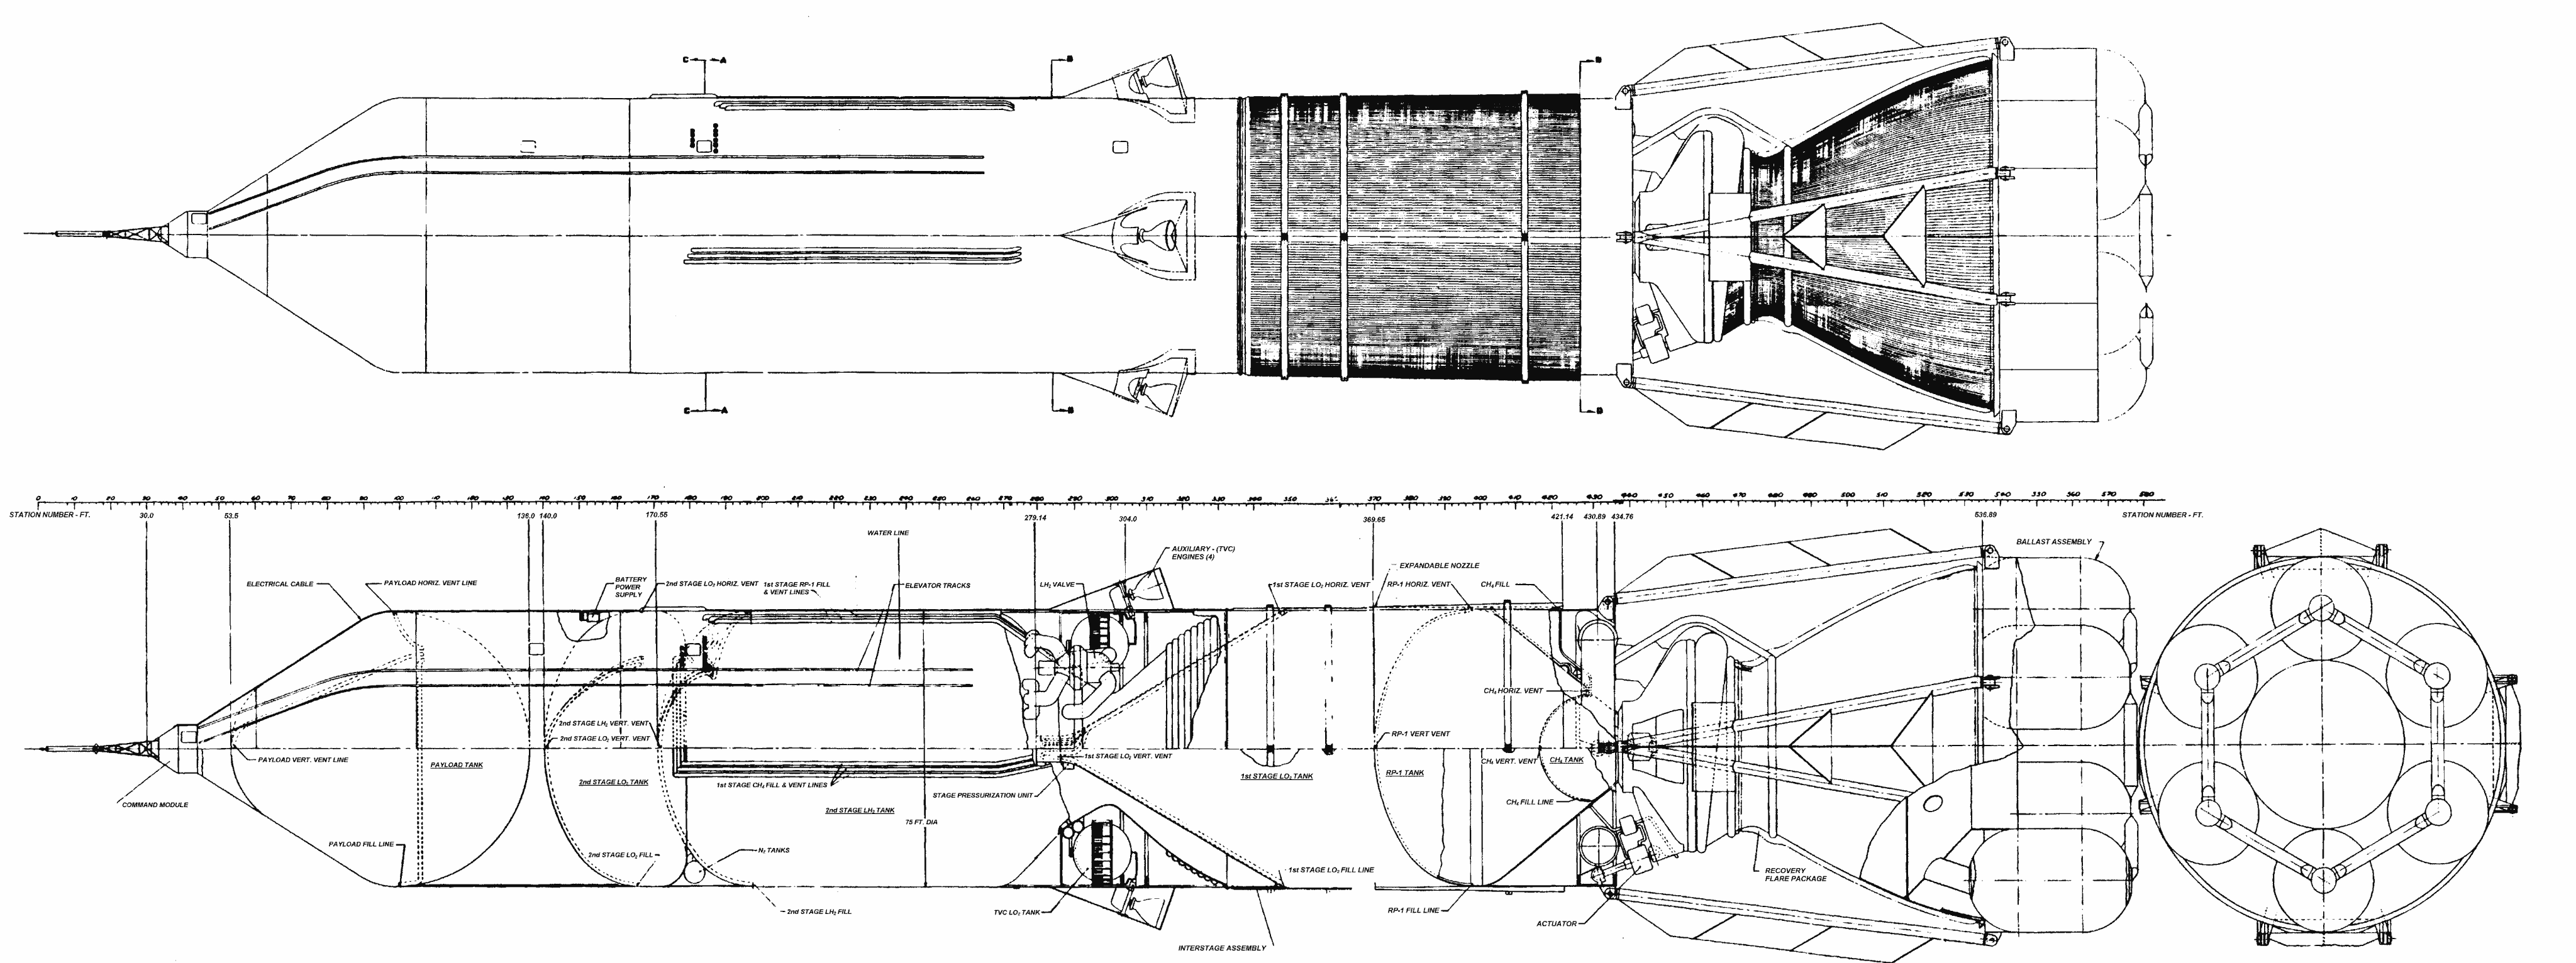 Sea Dragon rocket blueprint